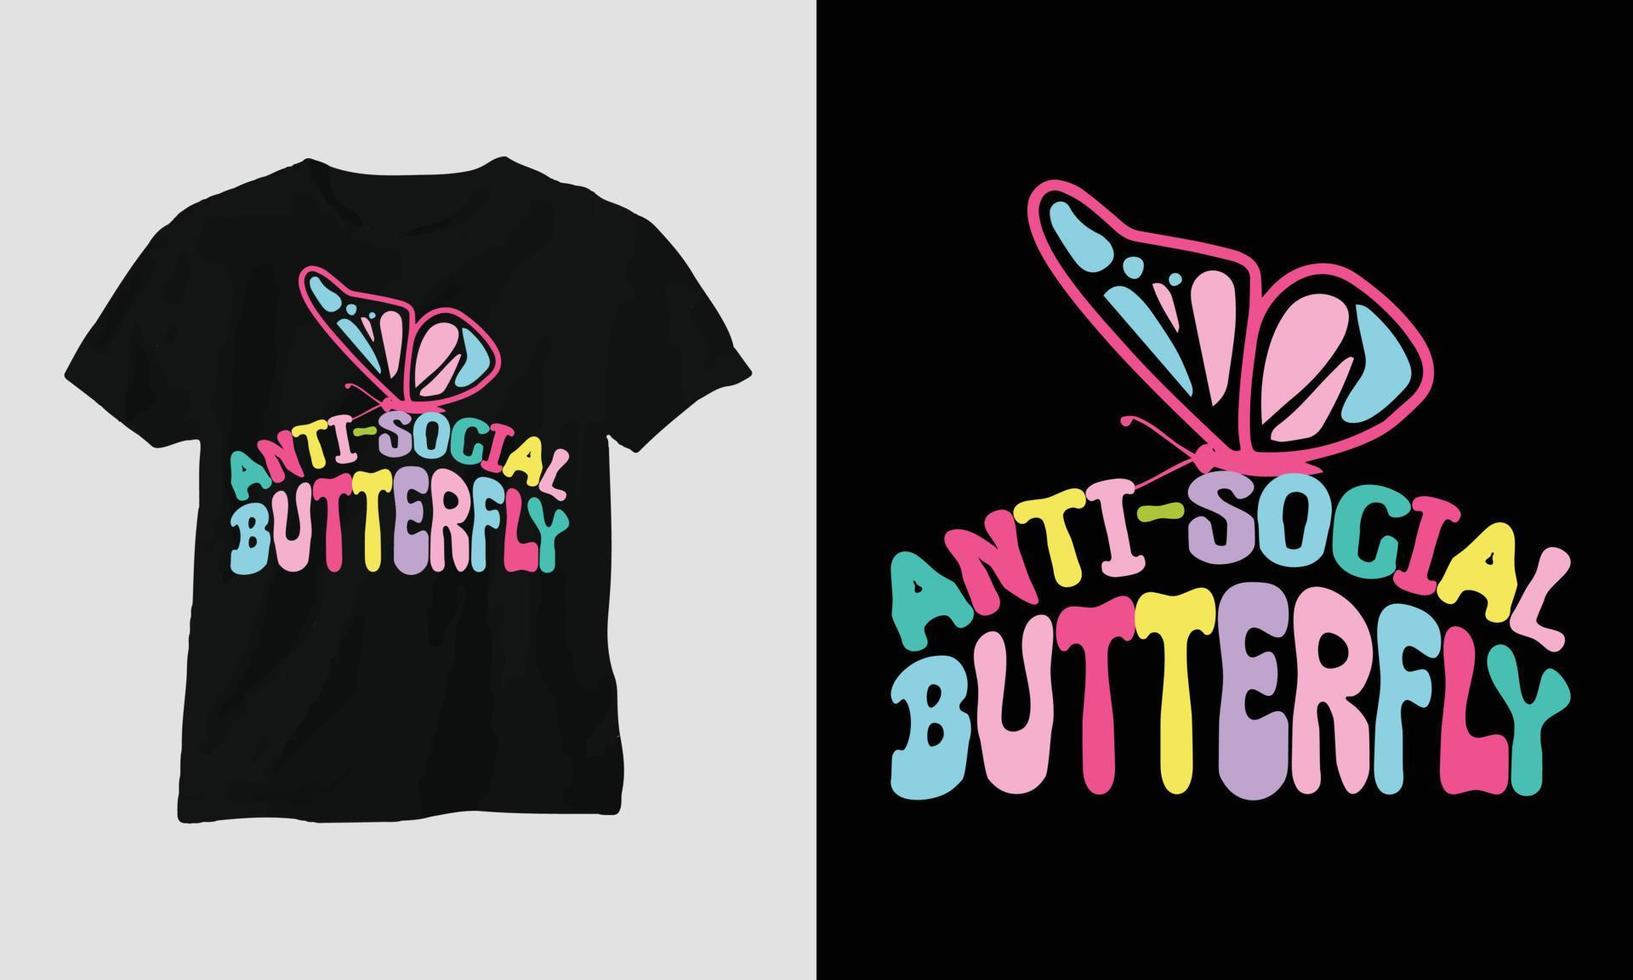 gewellter retro grooviger T-Shirt-Entwurf asozialer Schmetterling vektor